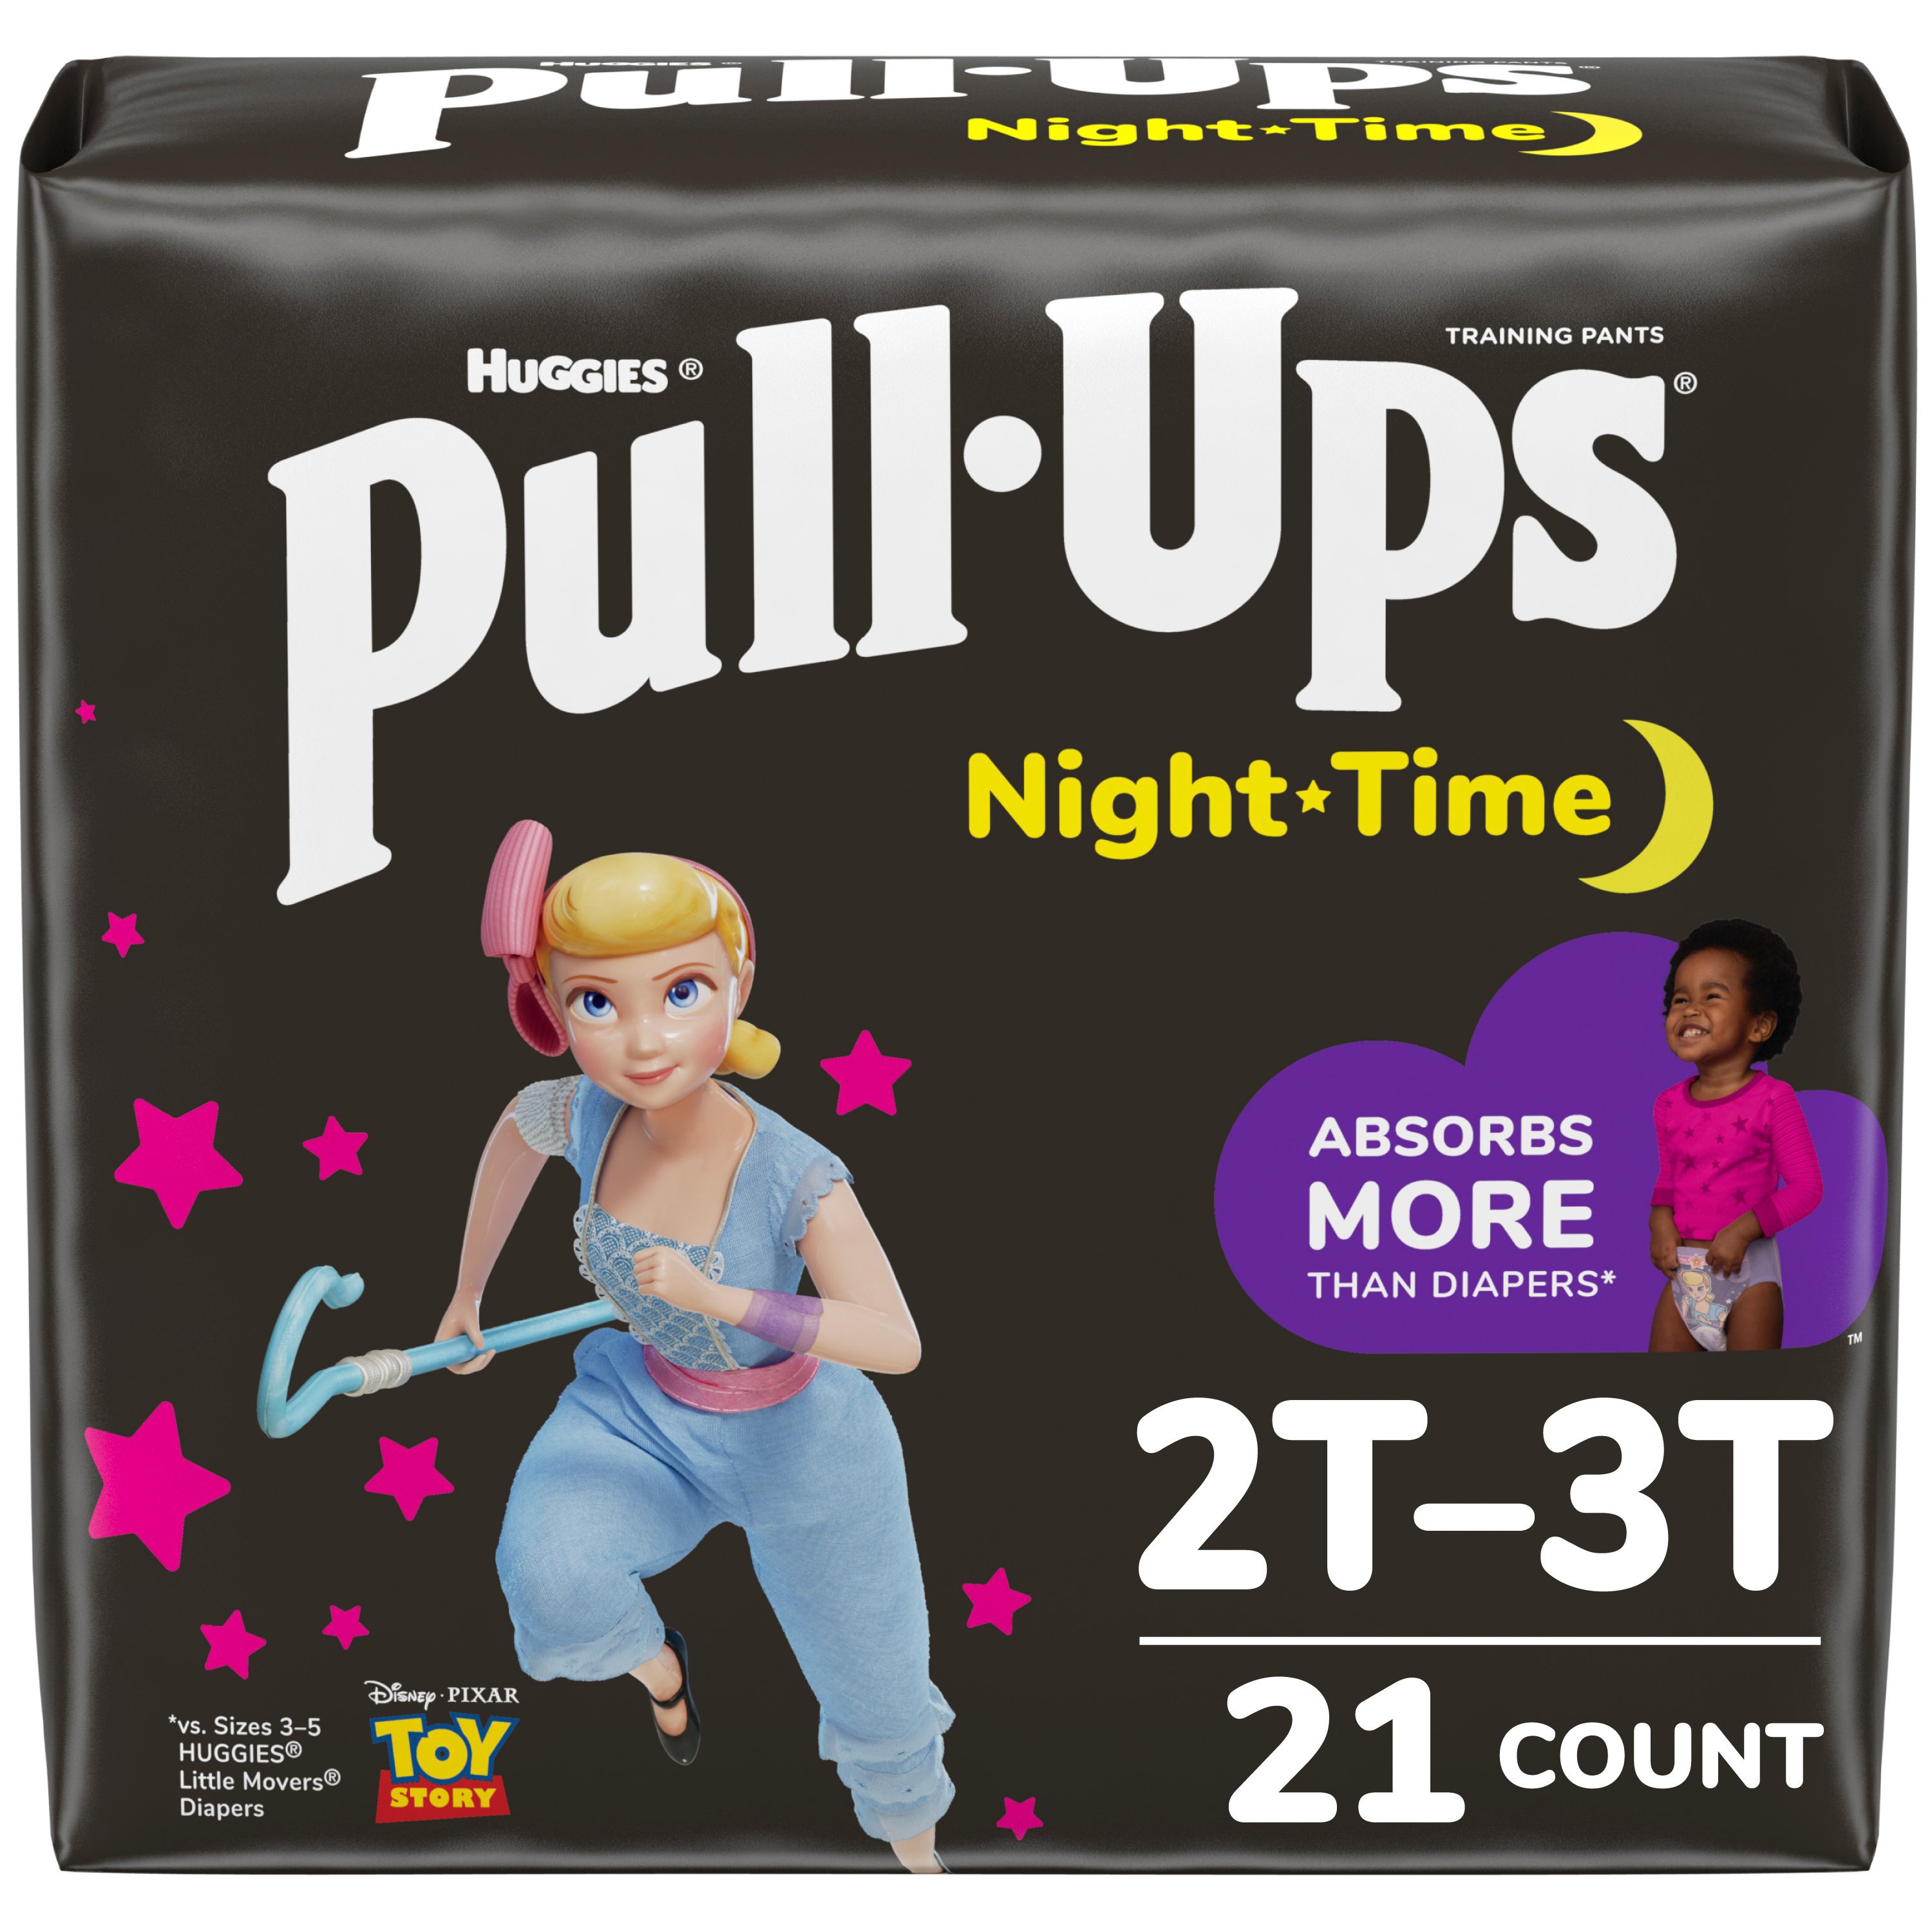 Huggies Pull-Ups Training Pants Night Time Disney Design 2T-3T